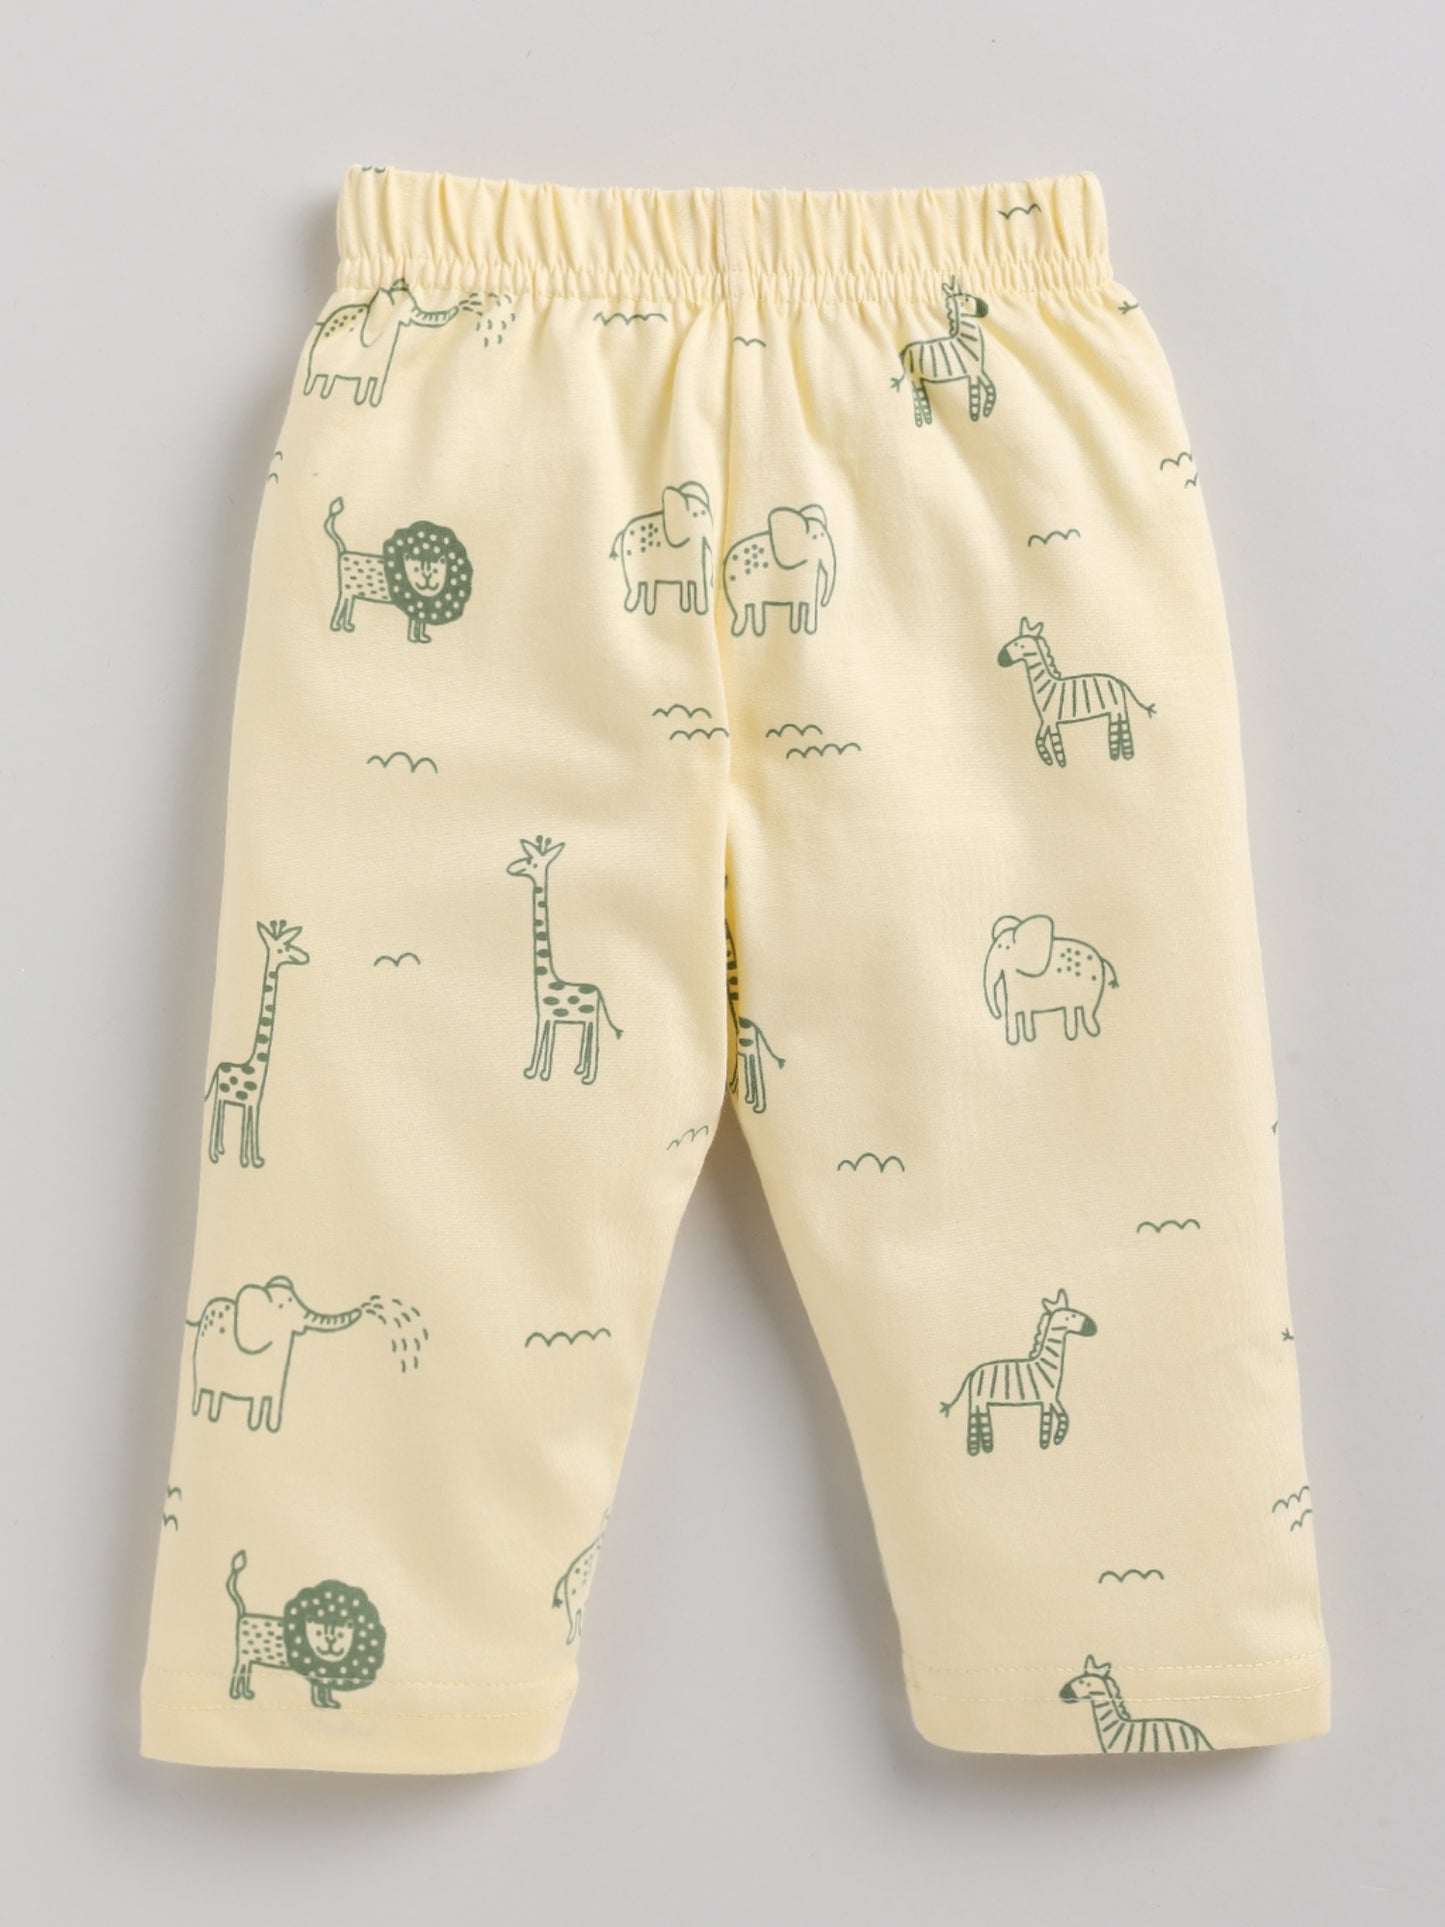 Cute Animal Print Yellow Half Sleeve Cotton Nightwear Set